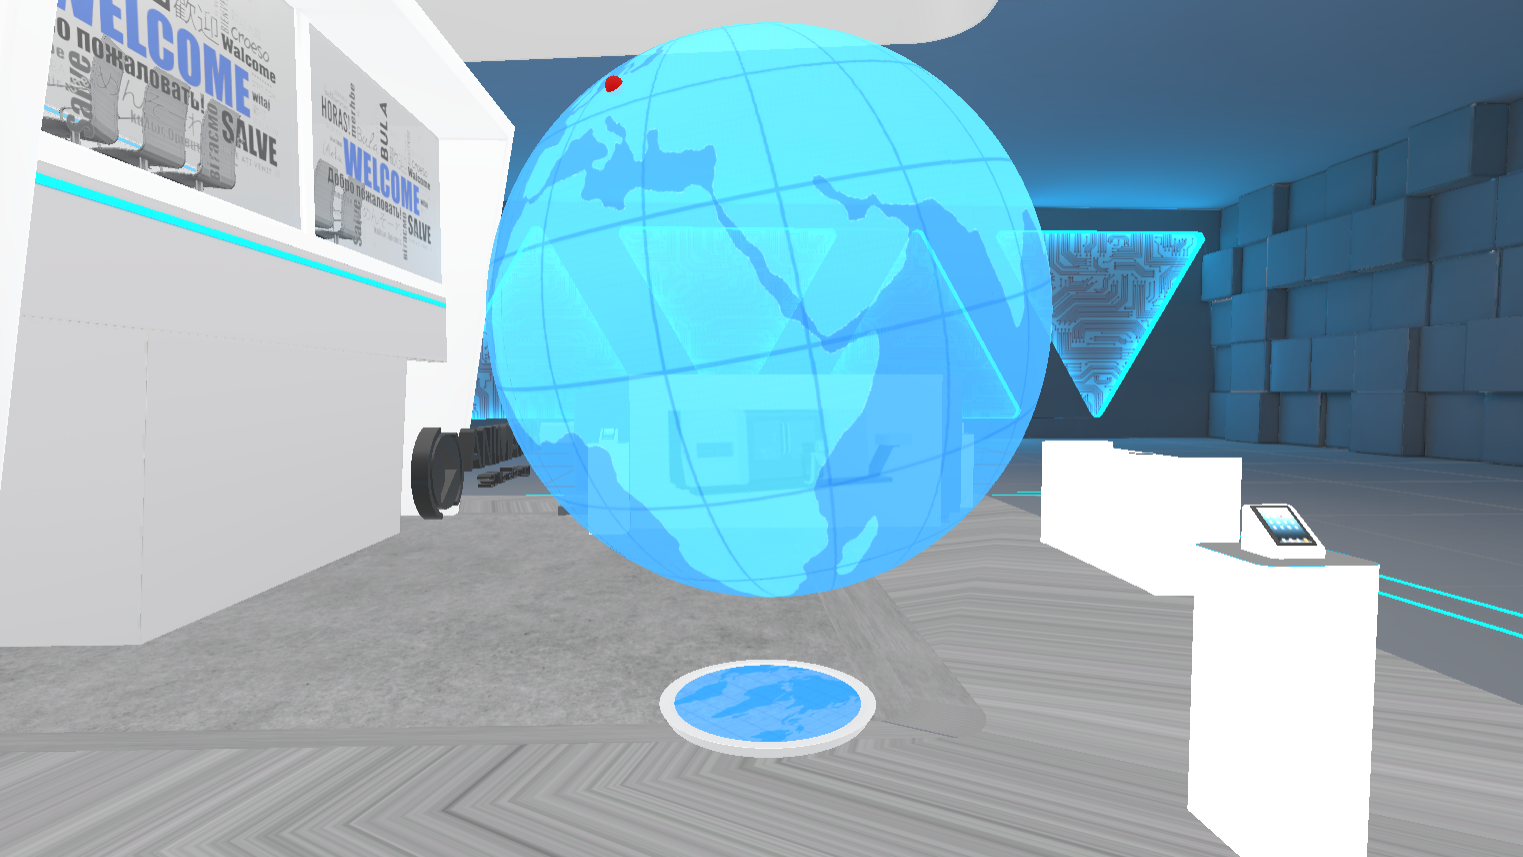 Animatrix Booth Level gameplay screenshot